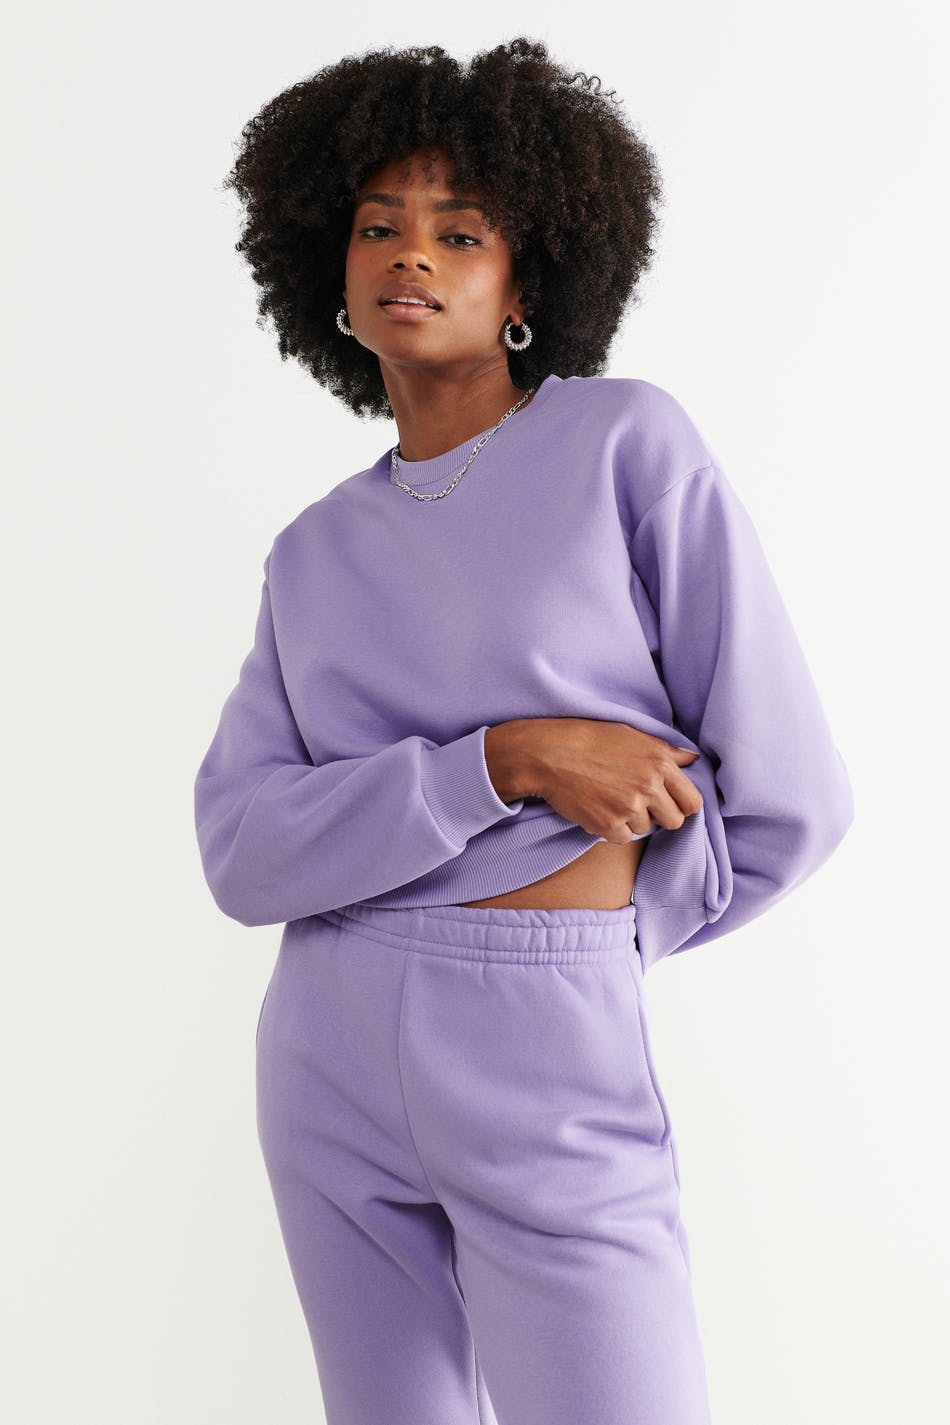 Basic sweater, Gina Tricot